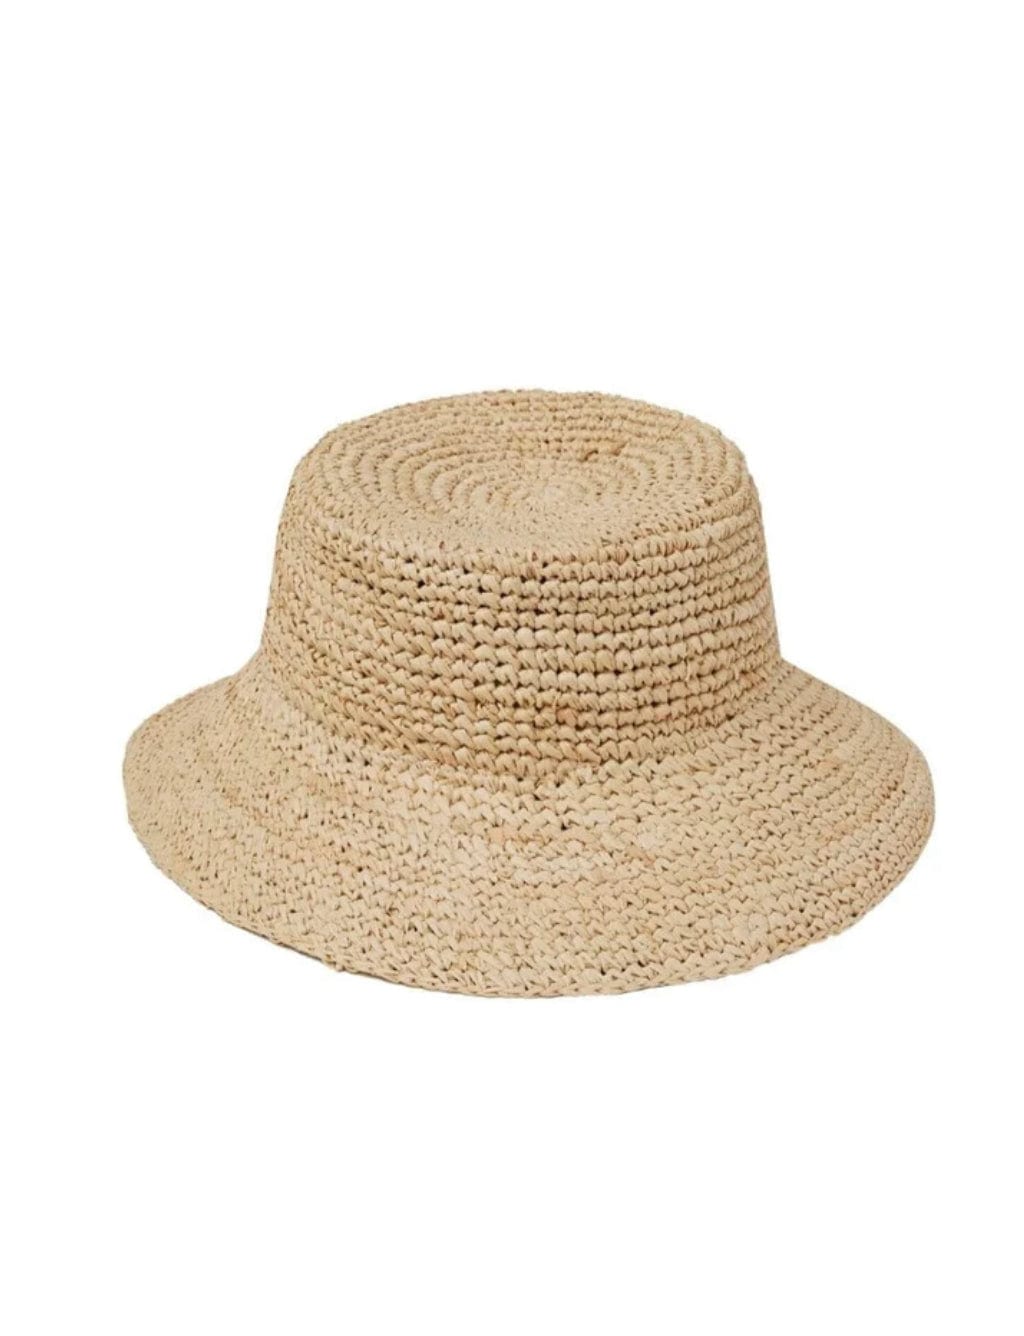 Little Beach Babes Boutique  Rylee and Cru Straw Bucket Hat